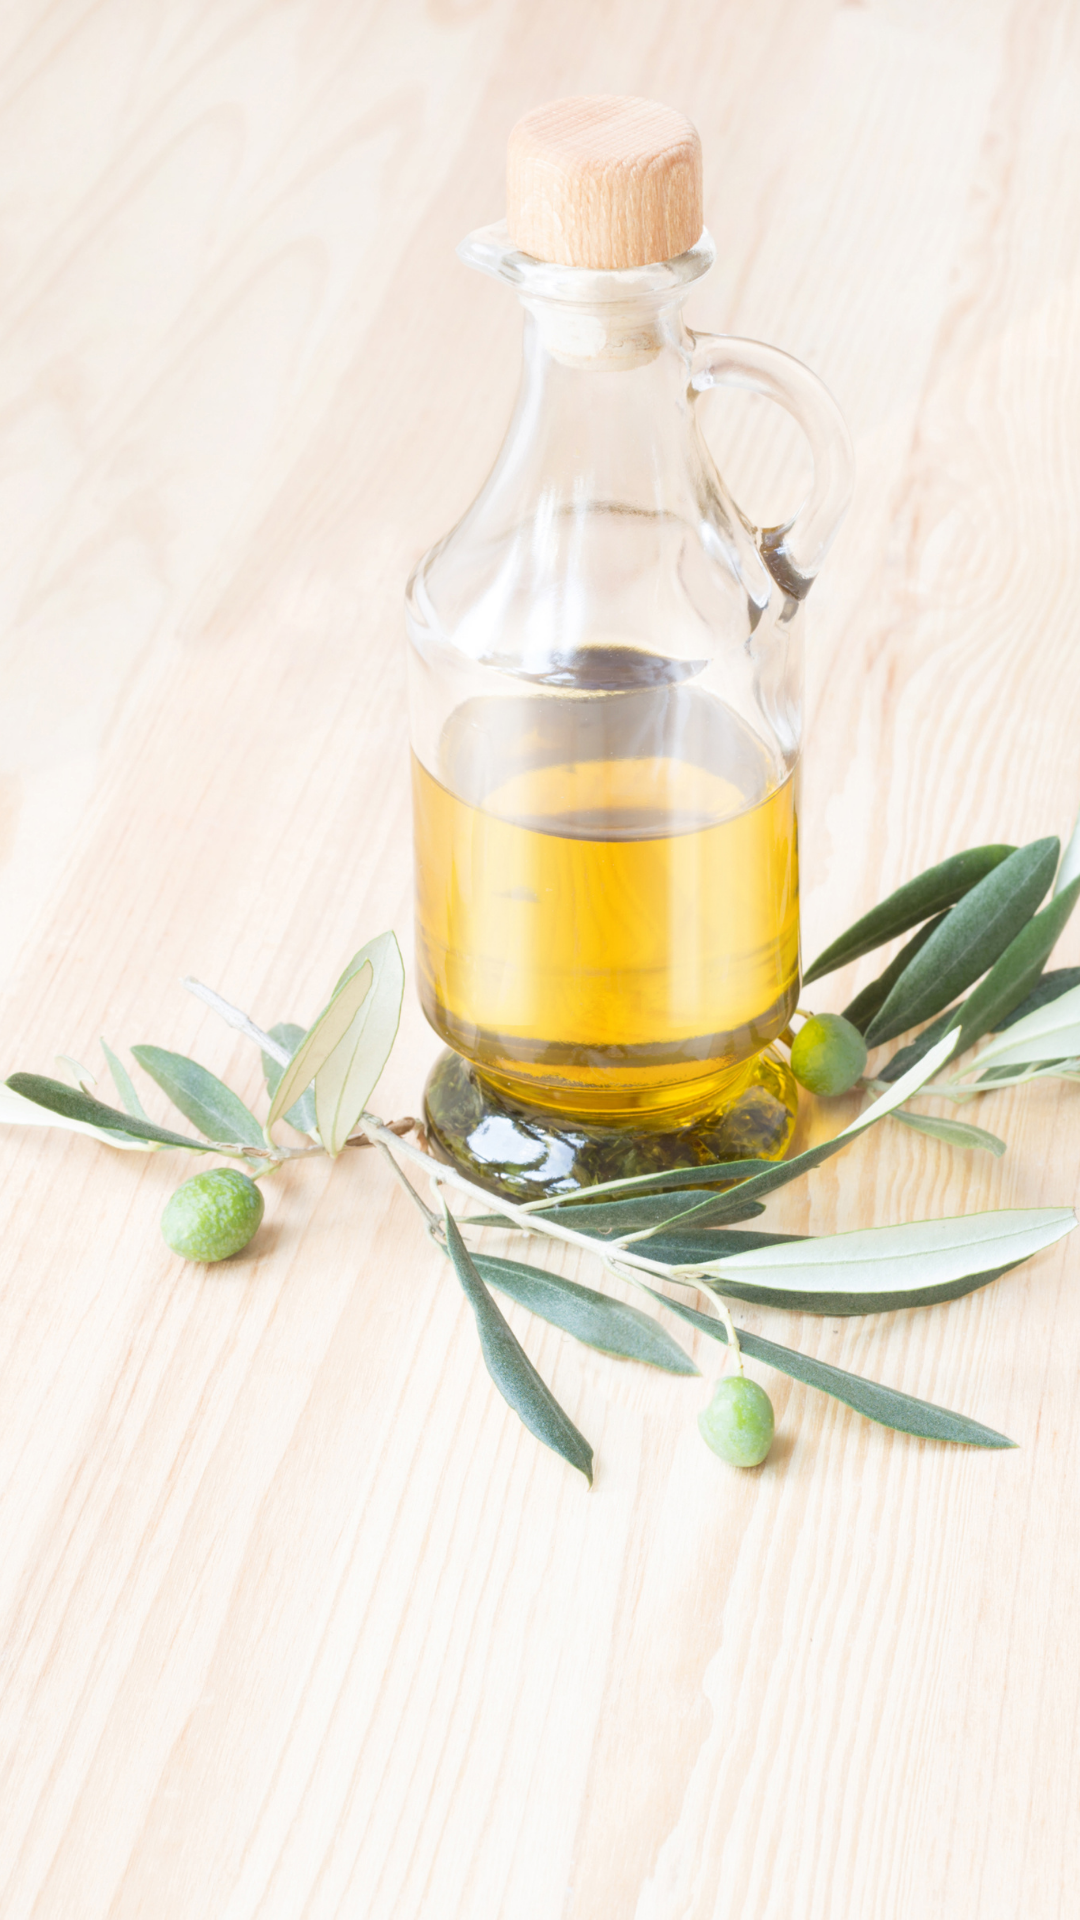 LE SHEA Chebe Hair Growth Oil with Tea Tree, Peppermint Oil & Herbs Le Shea’s Essentials